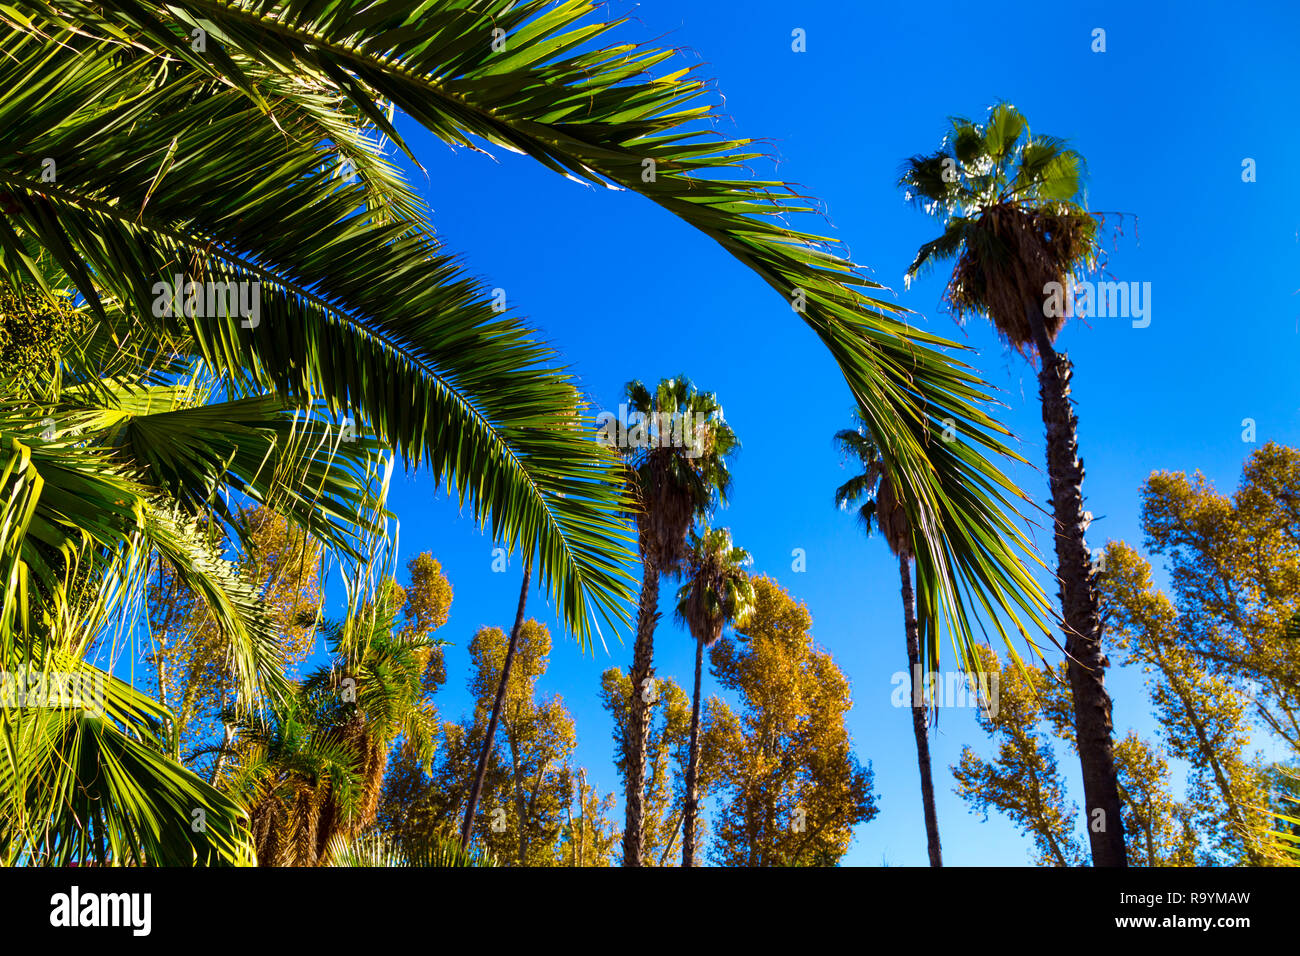 Tall palm trees at Ribalta Park in Castellon de la Plana, Spain Stock Photo